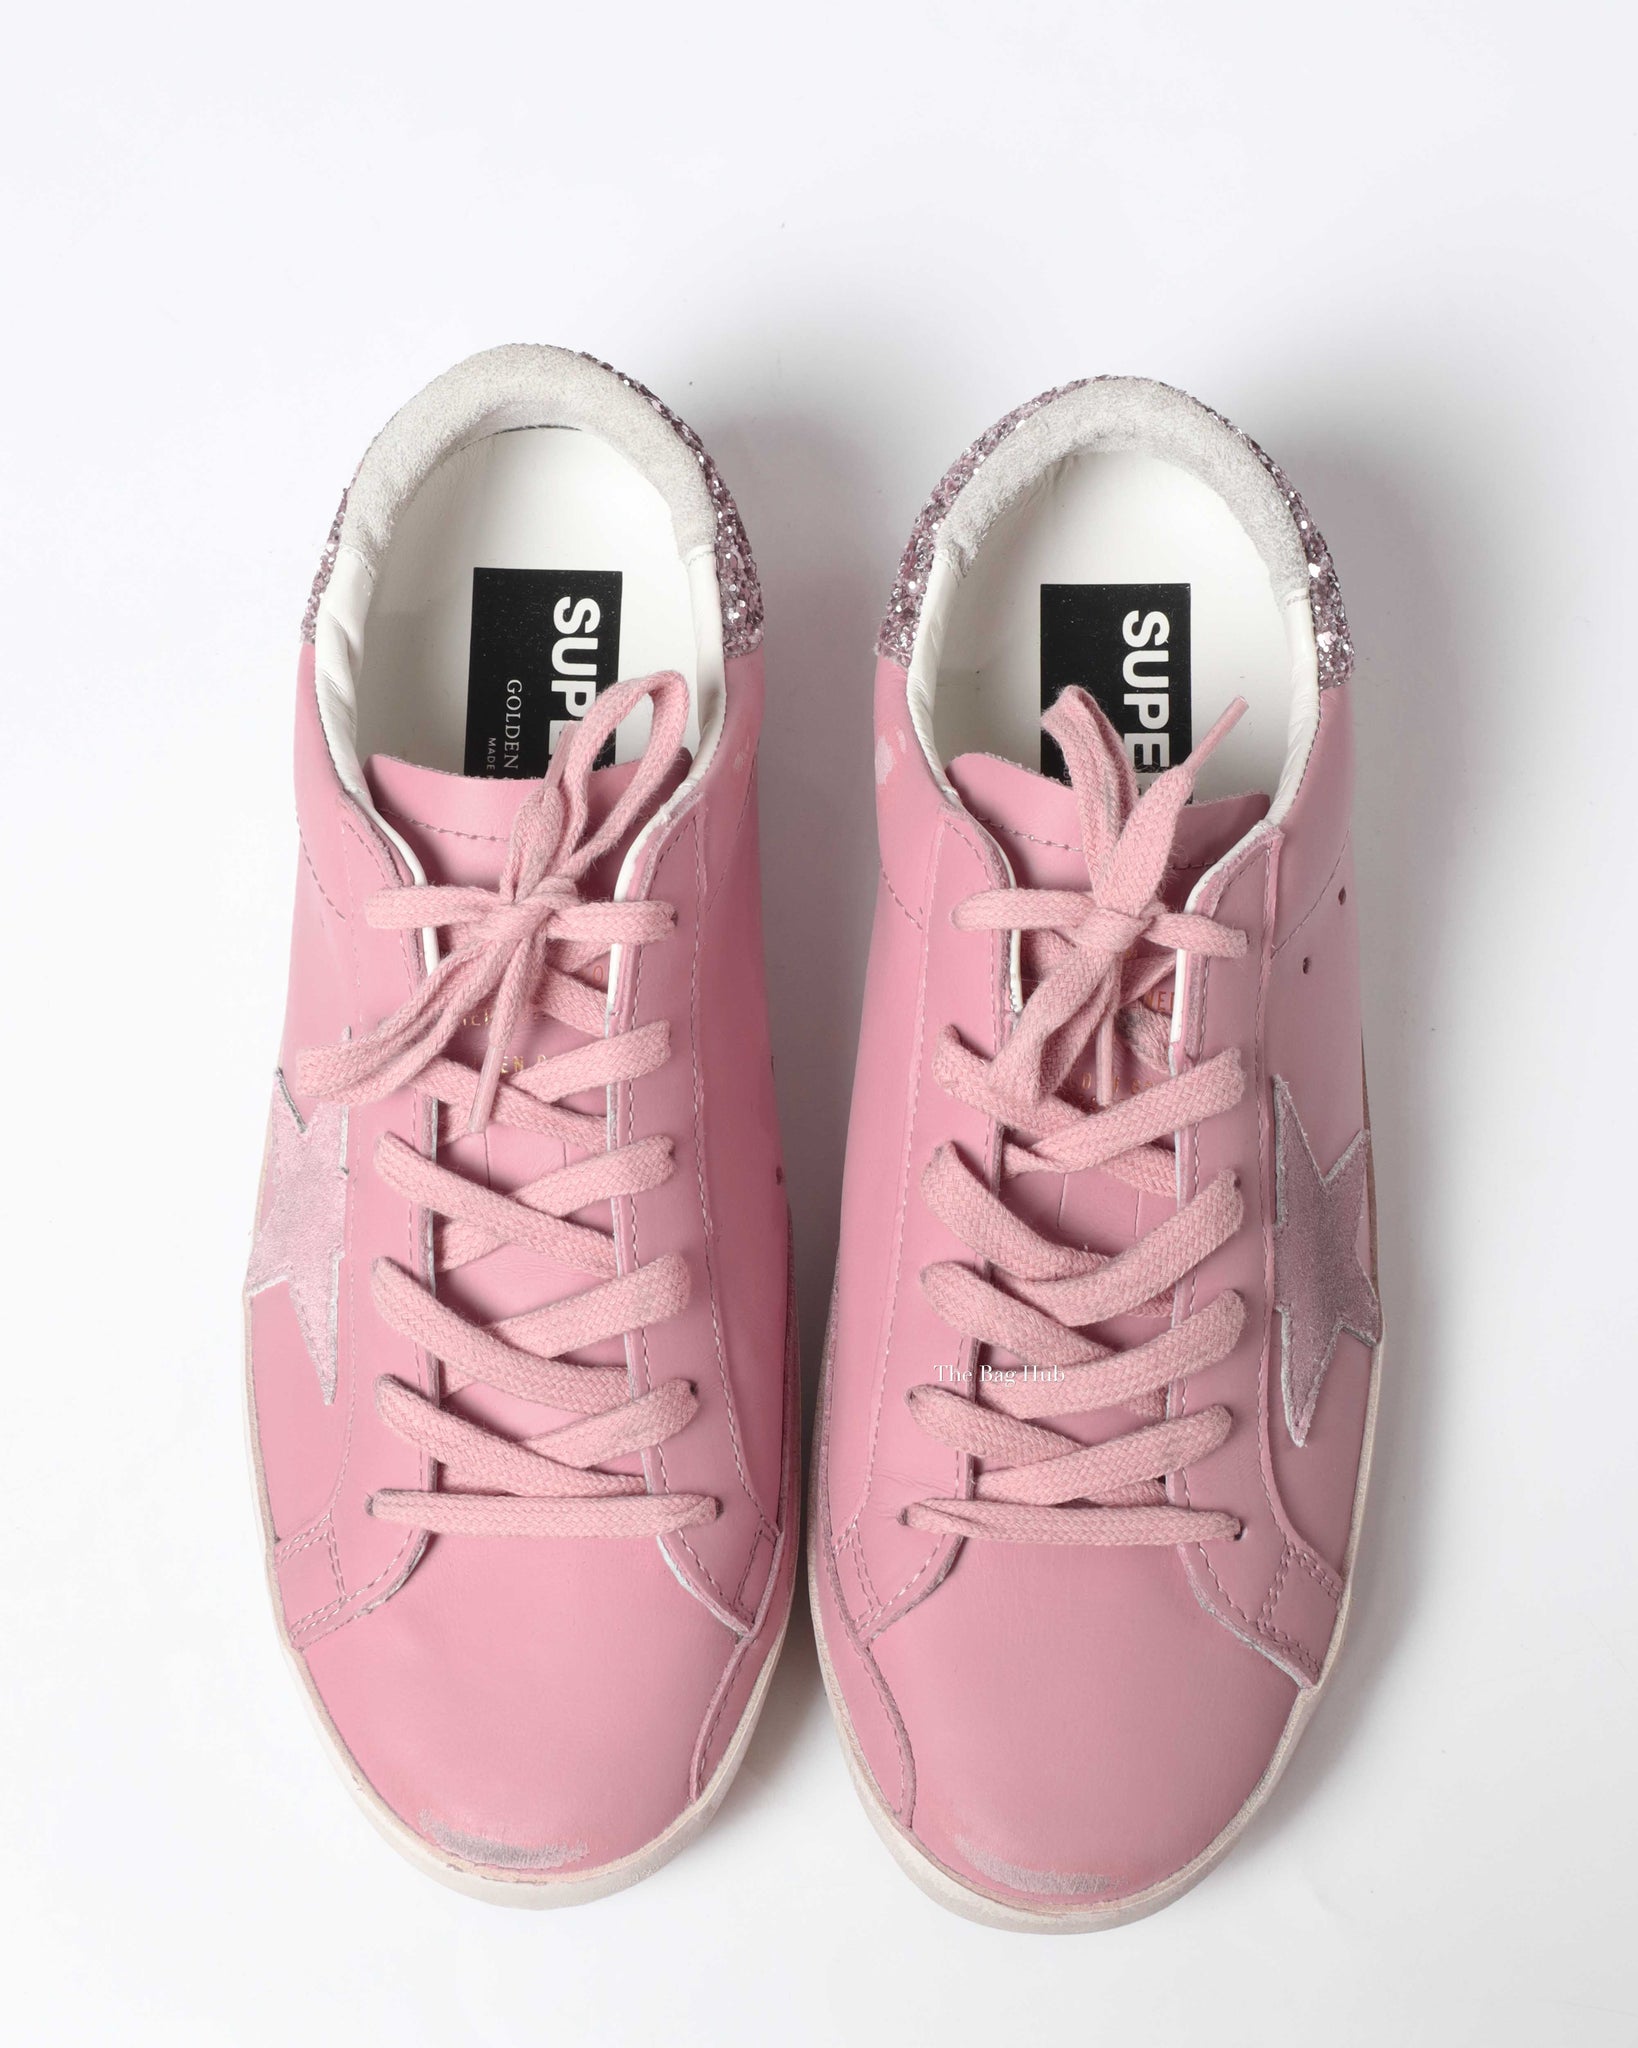 Golden Goose Antique Pink Leather w/ Glitter Heeltab Classic Superstar Sneaker Size 39-8